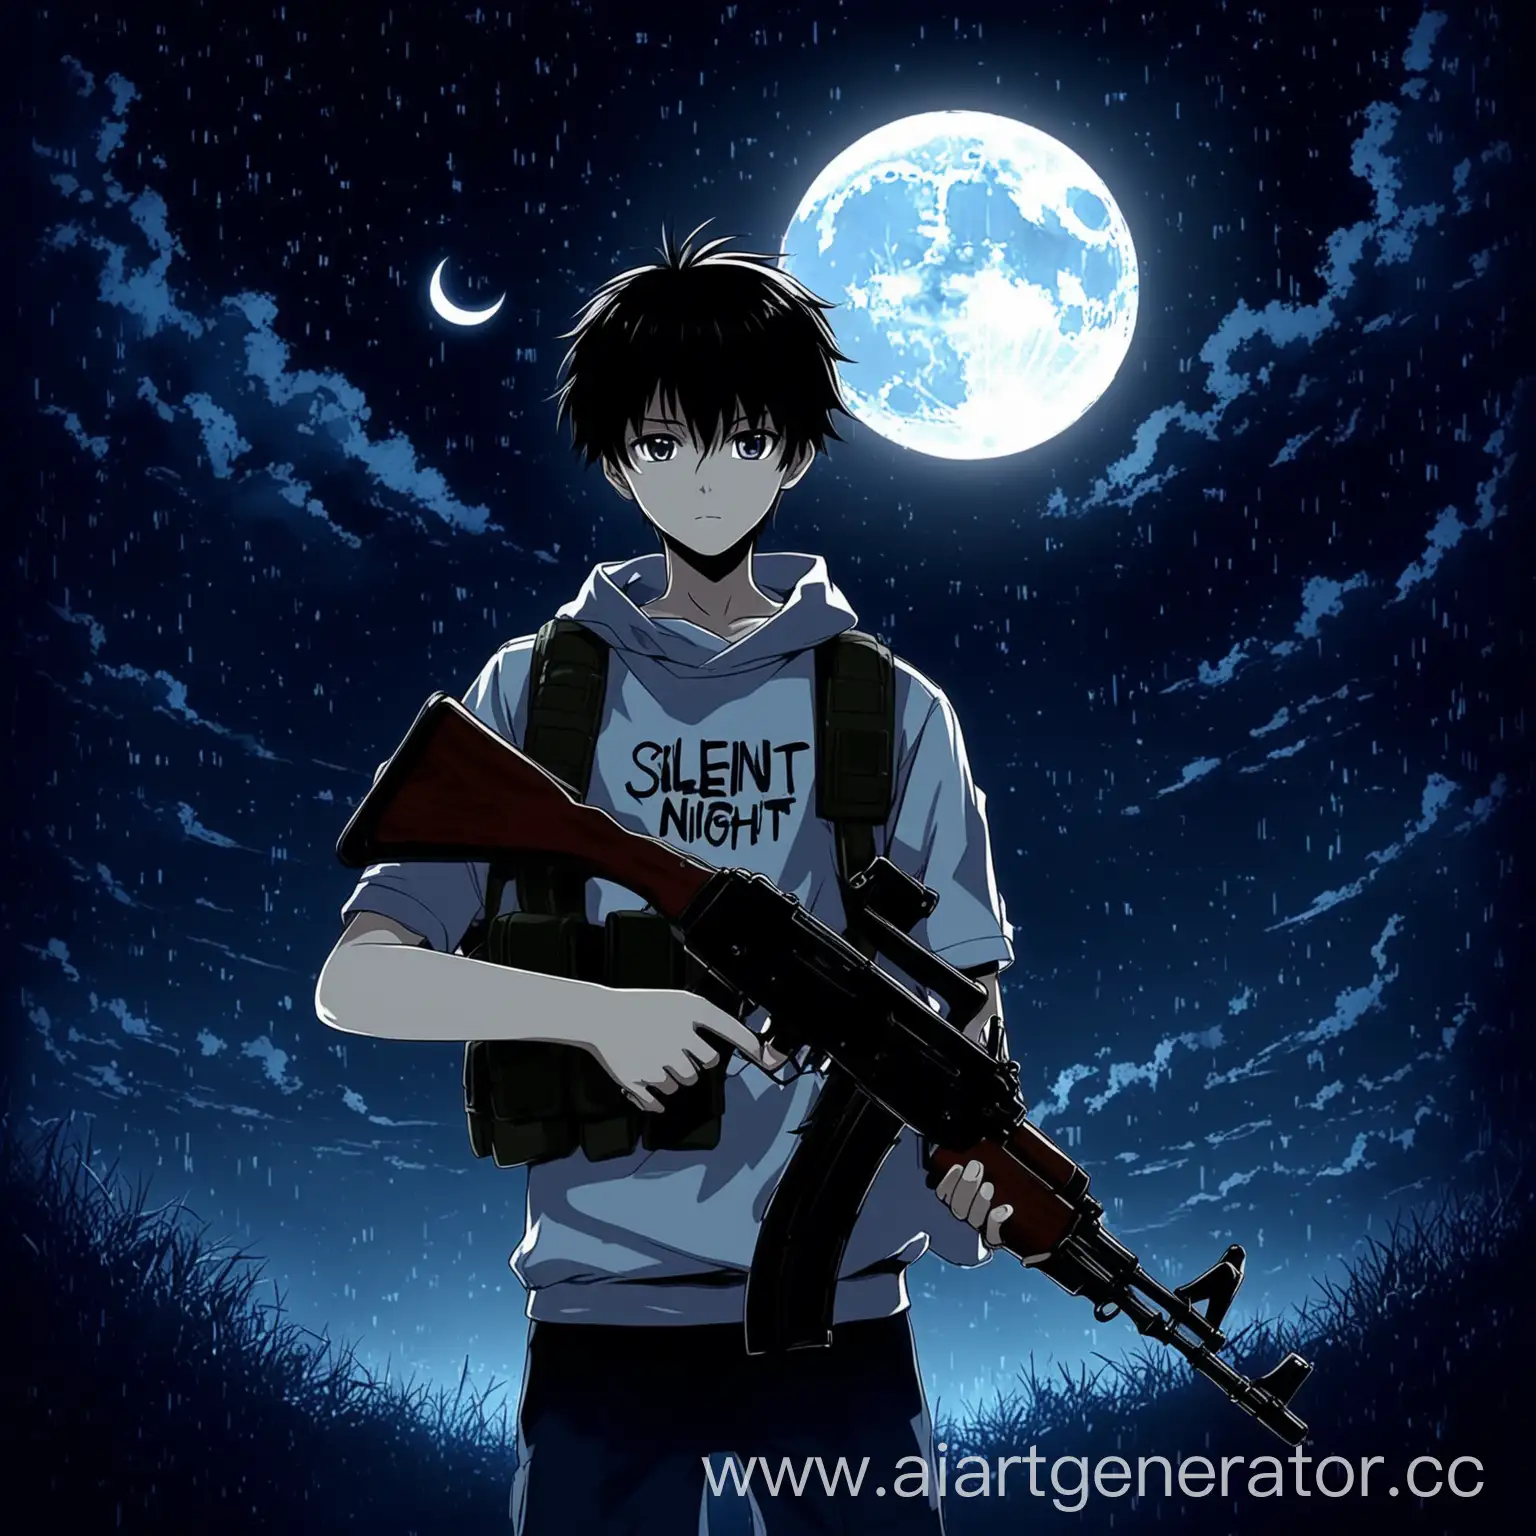 Silent-Anime-Boy-with-Kalashnikov-and-Digl-Against-Moonlit-Night-Sky